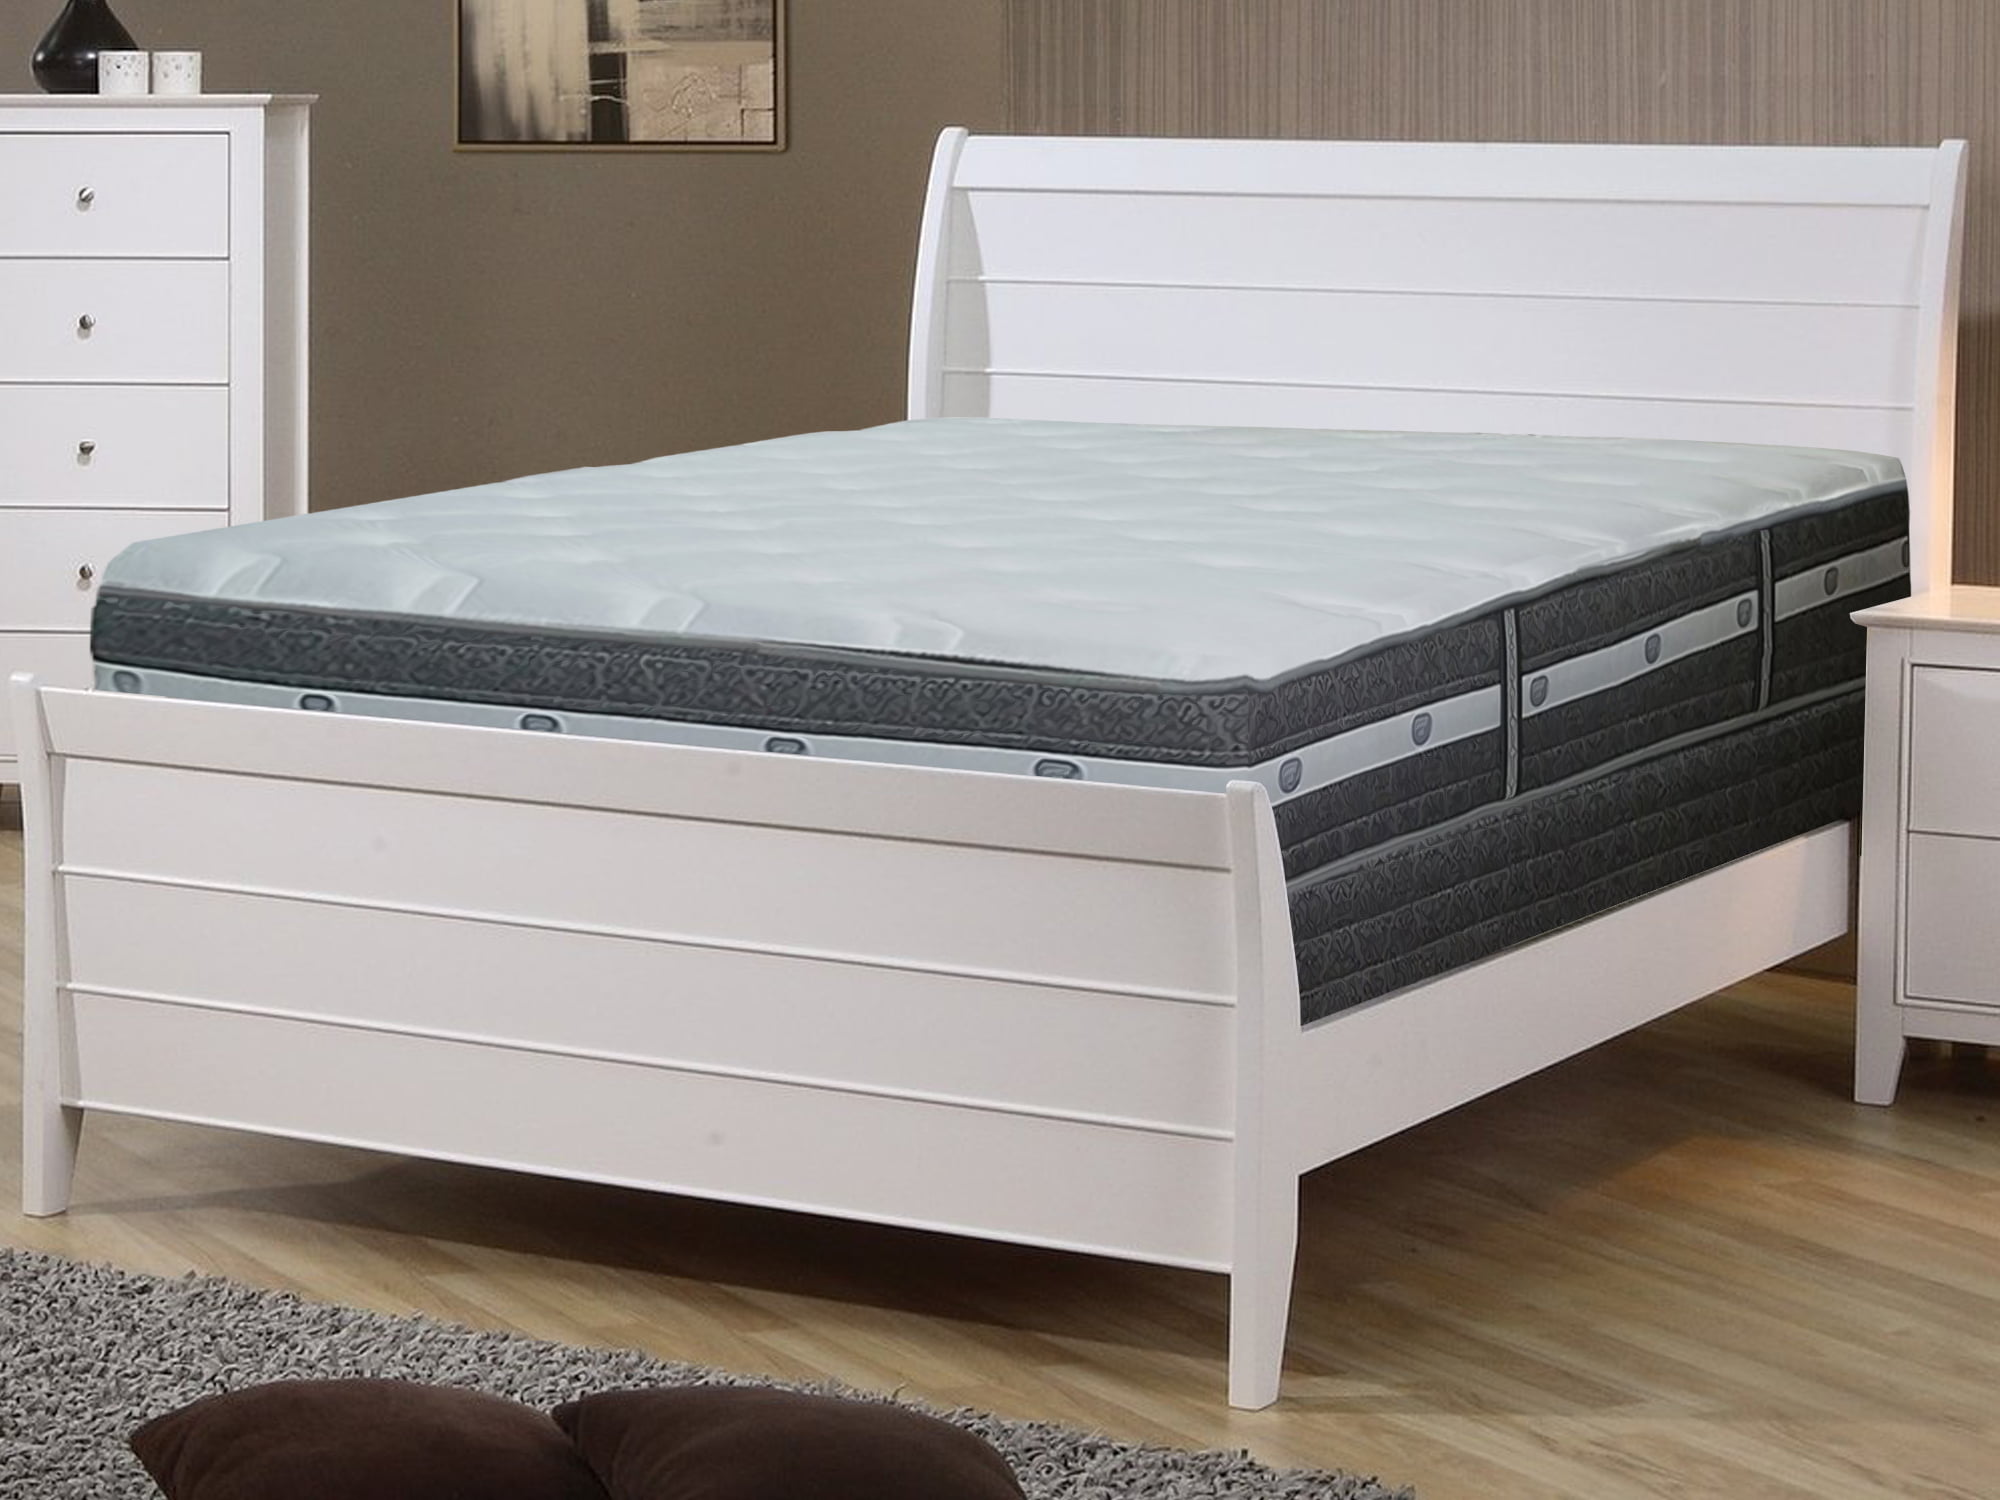 queen mattress set with split box springs